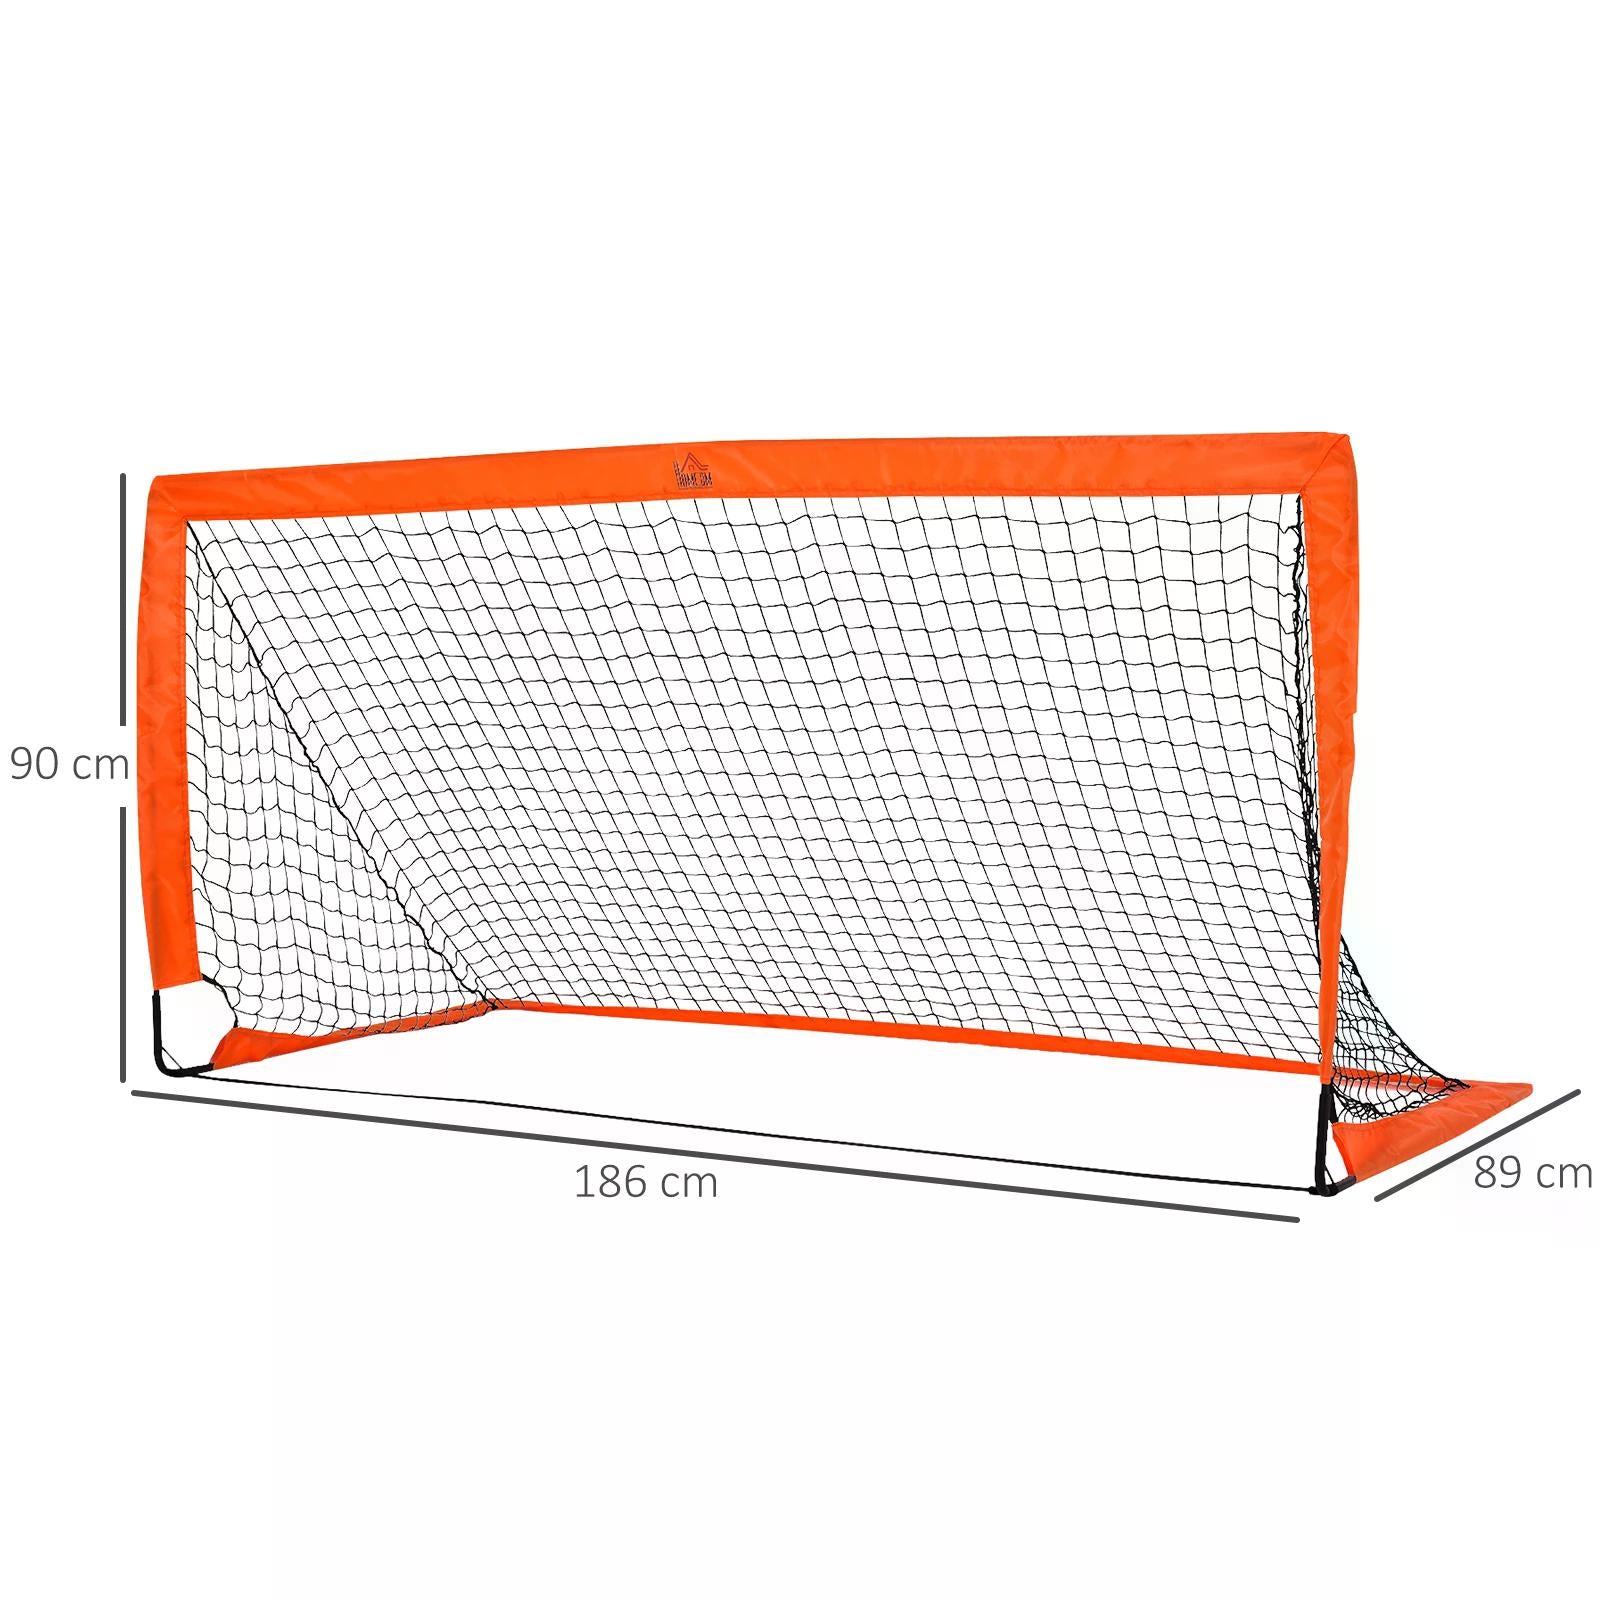 Tetoron Mesh Outdoor Folding Football Goal Orange-2